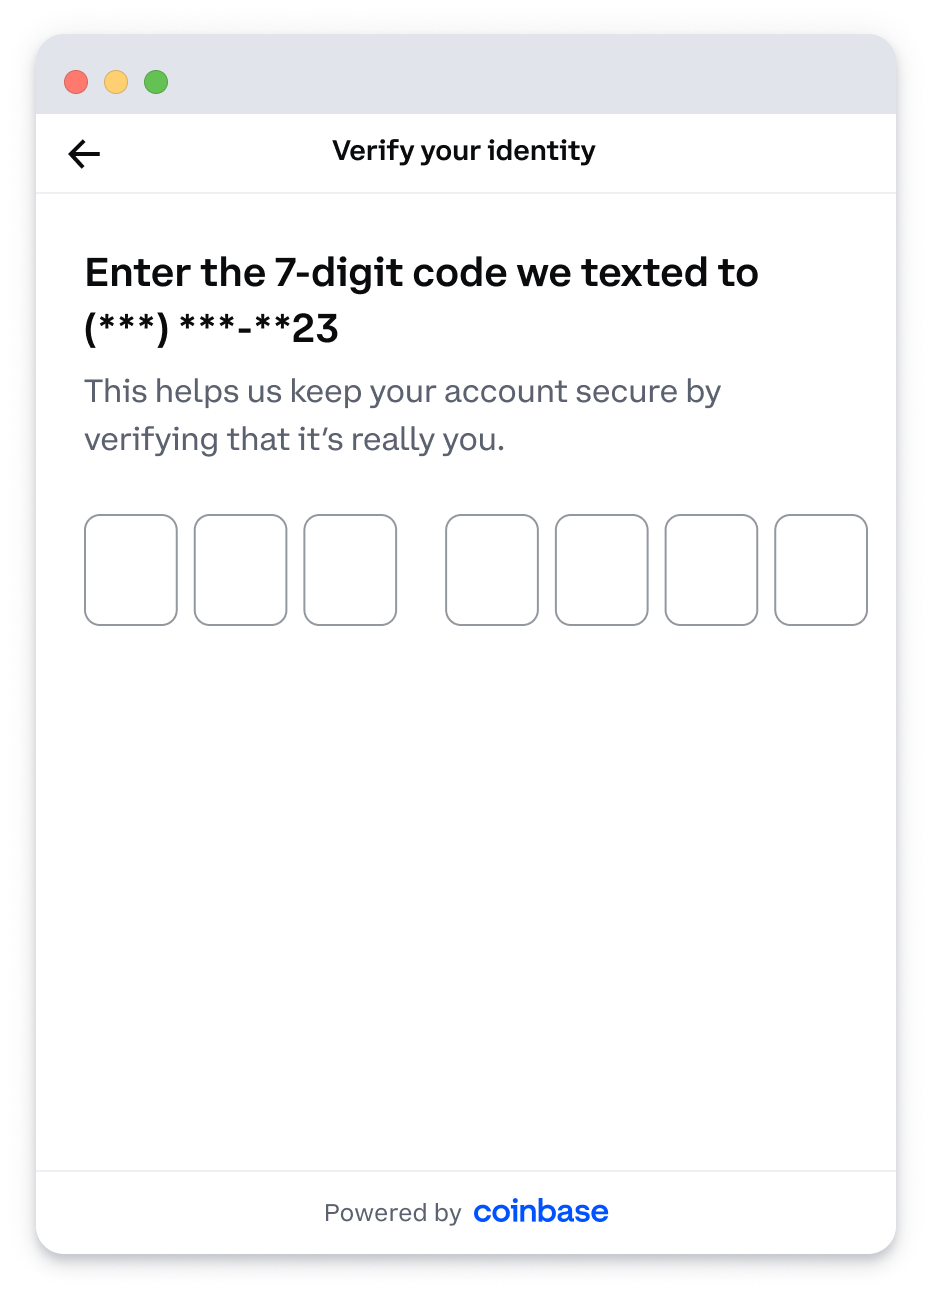 Go through 2FA again and enter the 7-digit code.